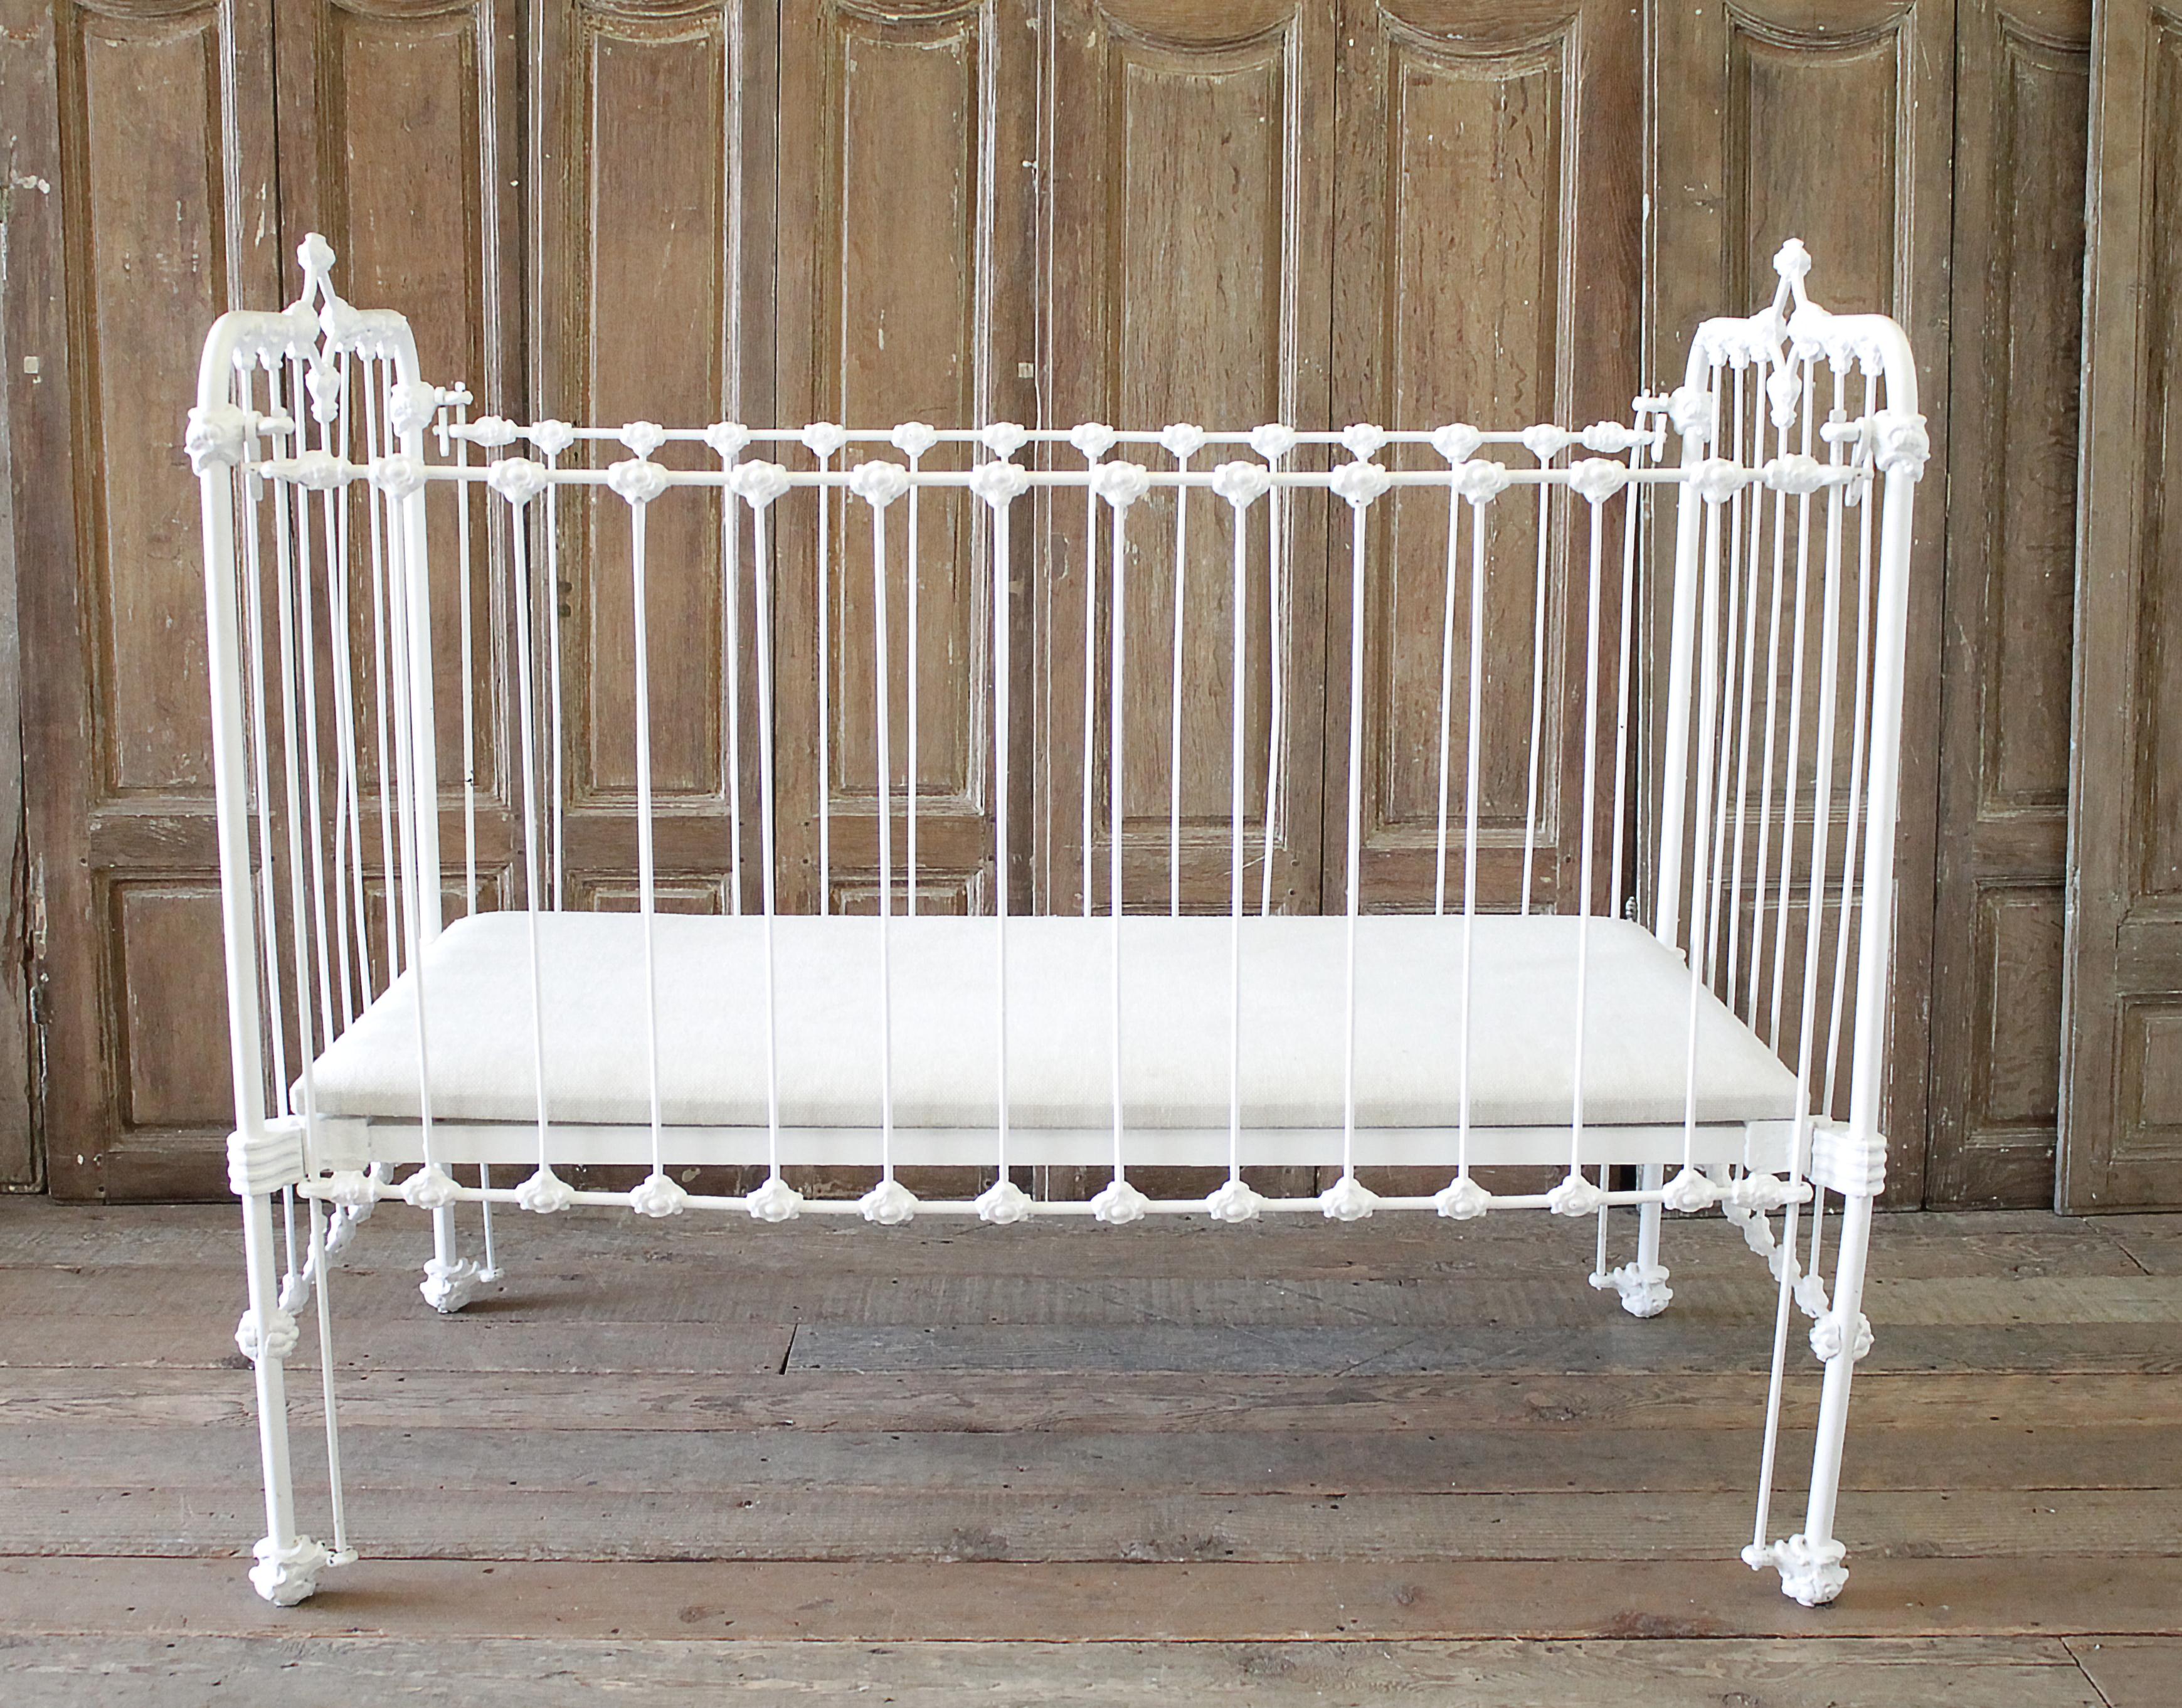 19th century iron crib baby bed
Measures: 53